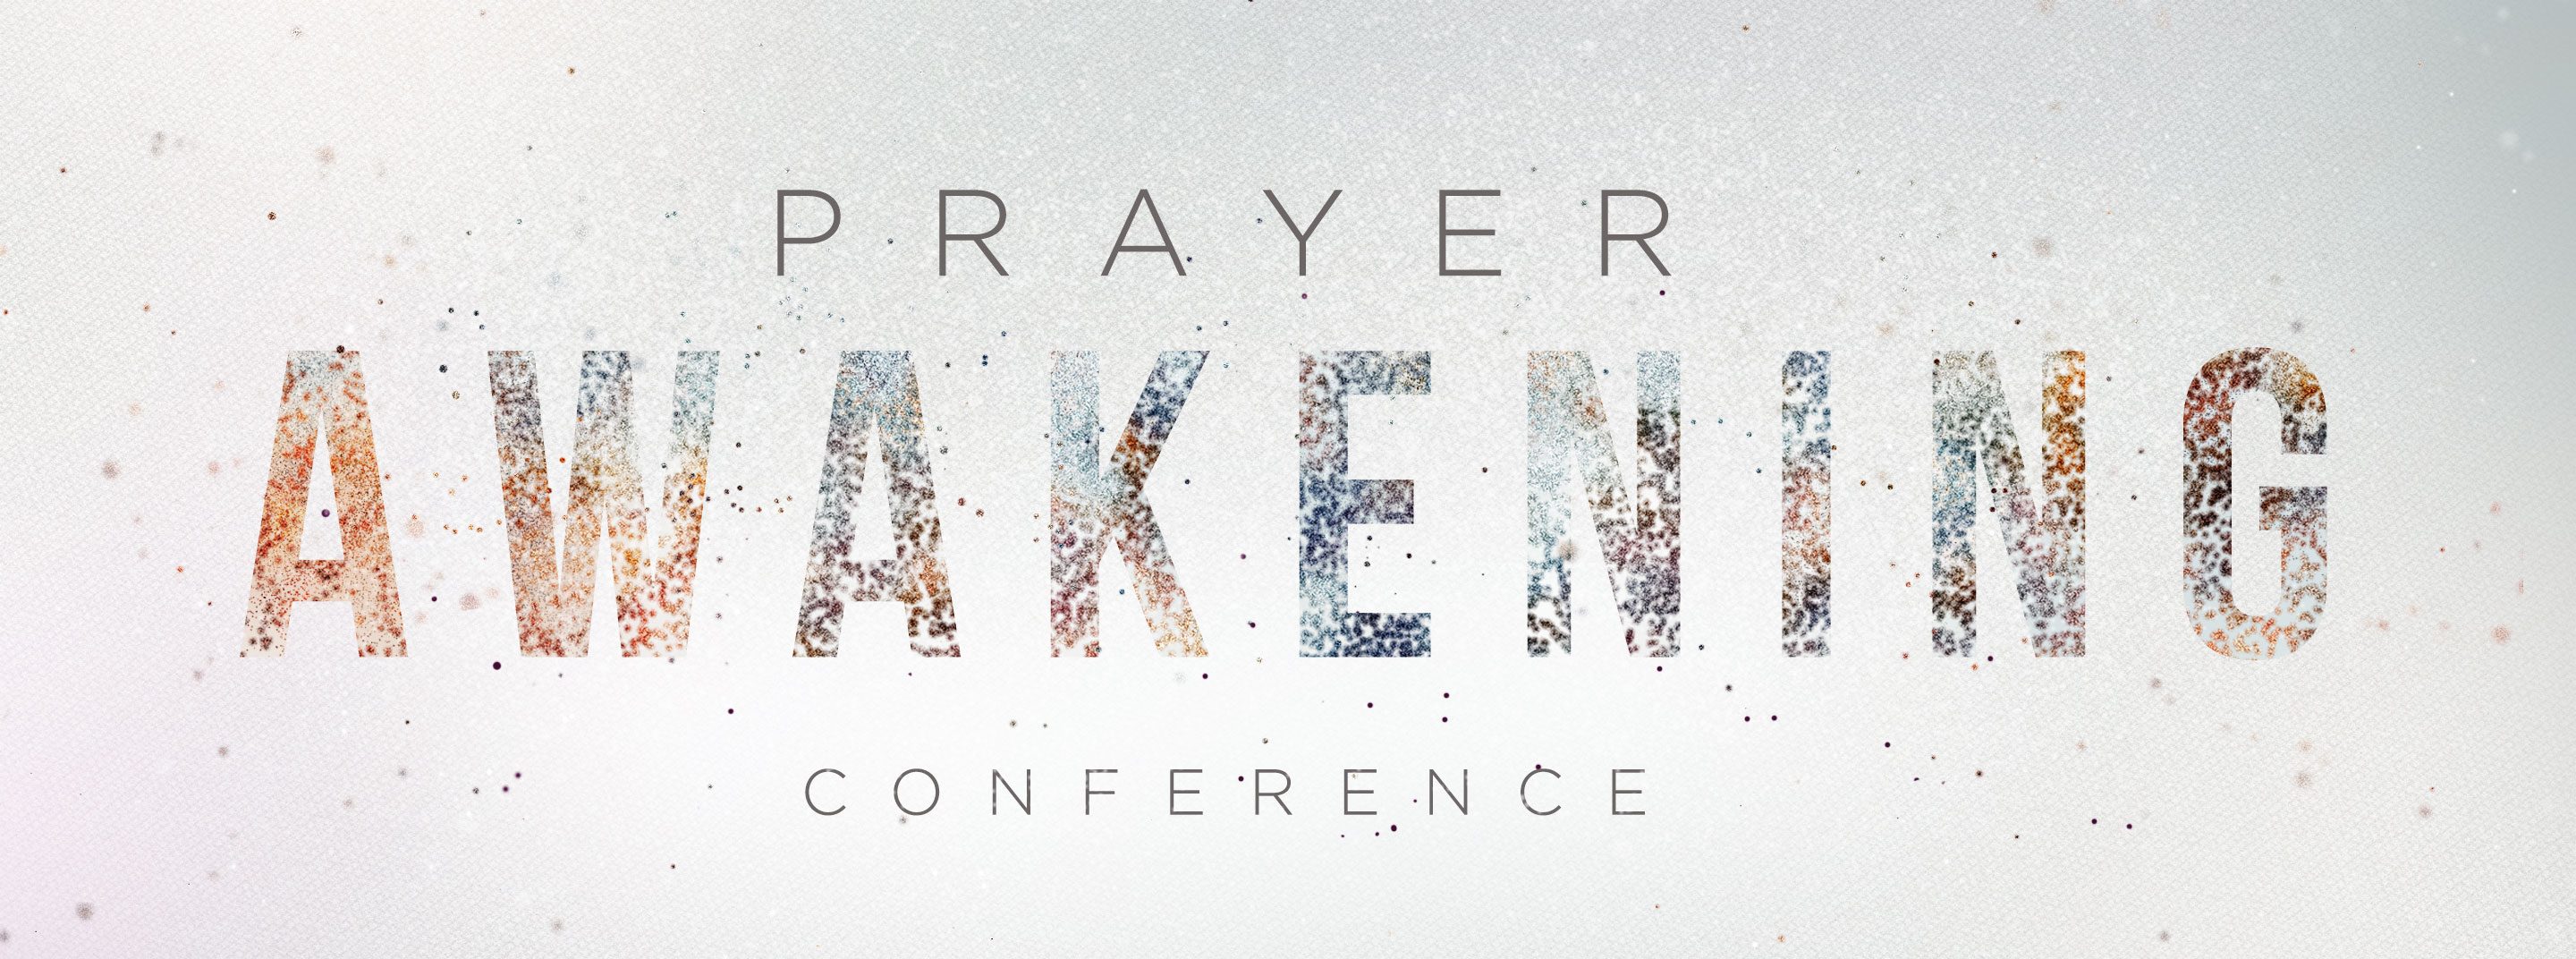 awaken conference salvation